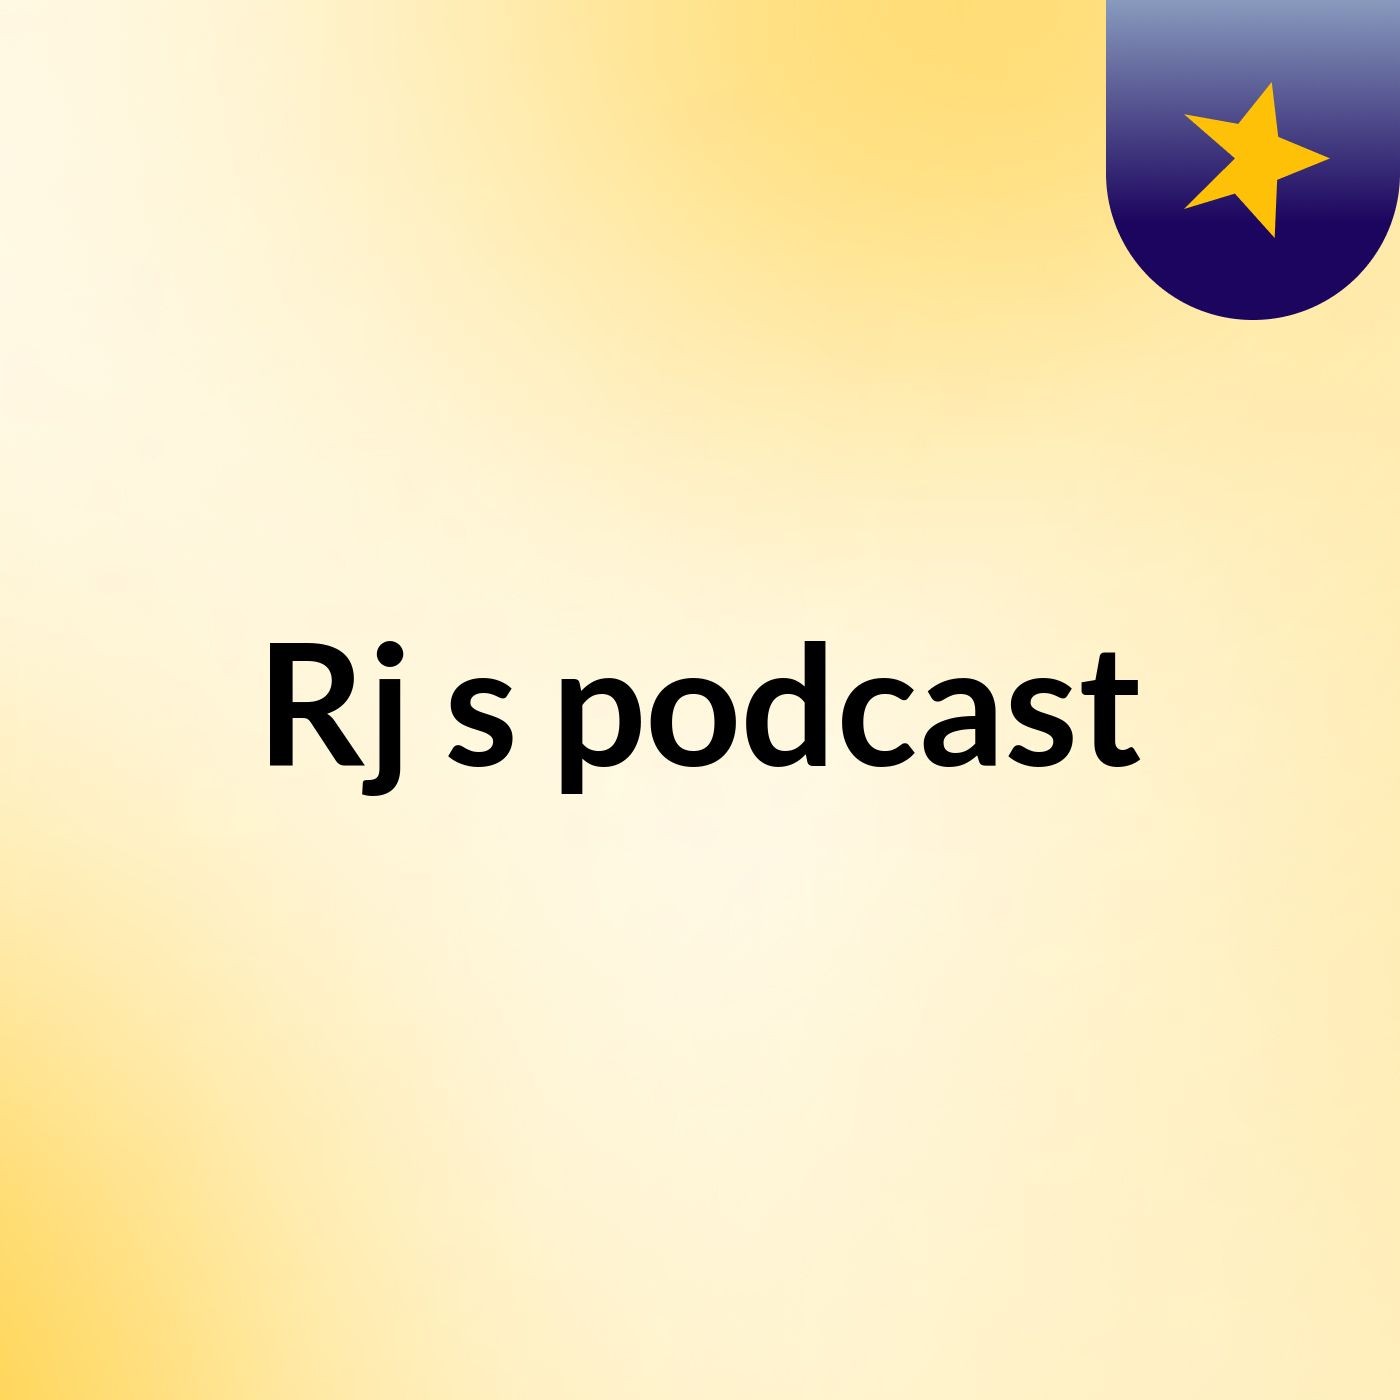 Rj's podcast